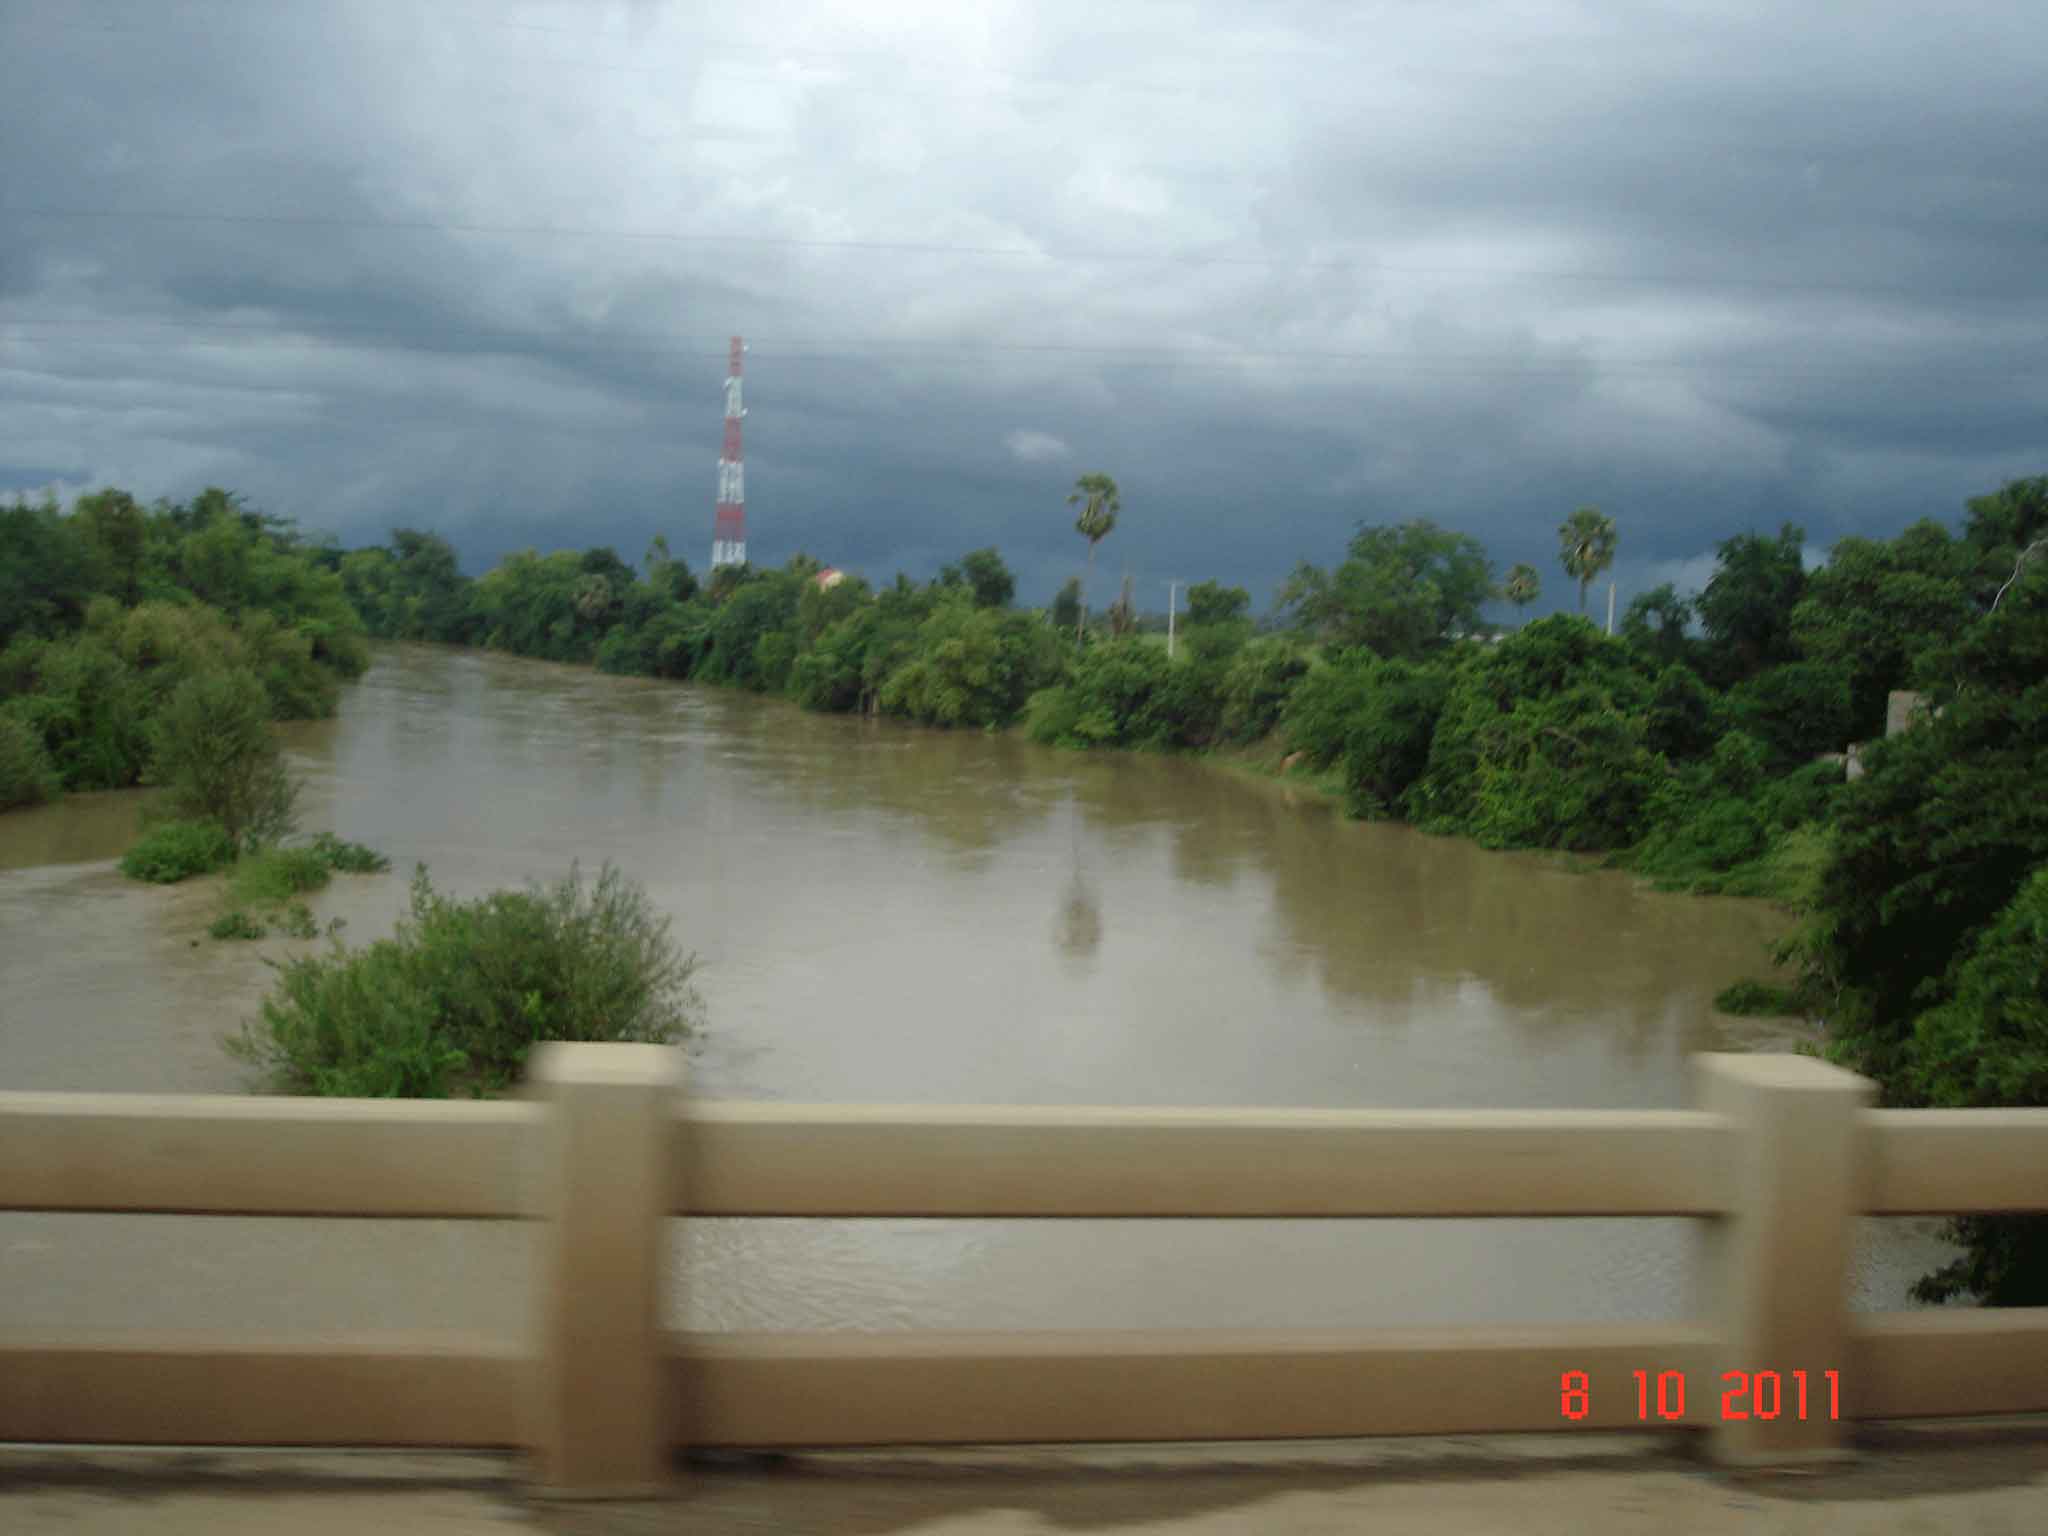 Heavy monsoon rain already fallen,rivers rising rapidly from the rain